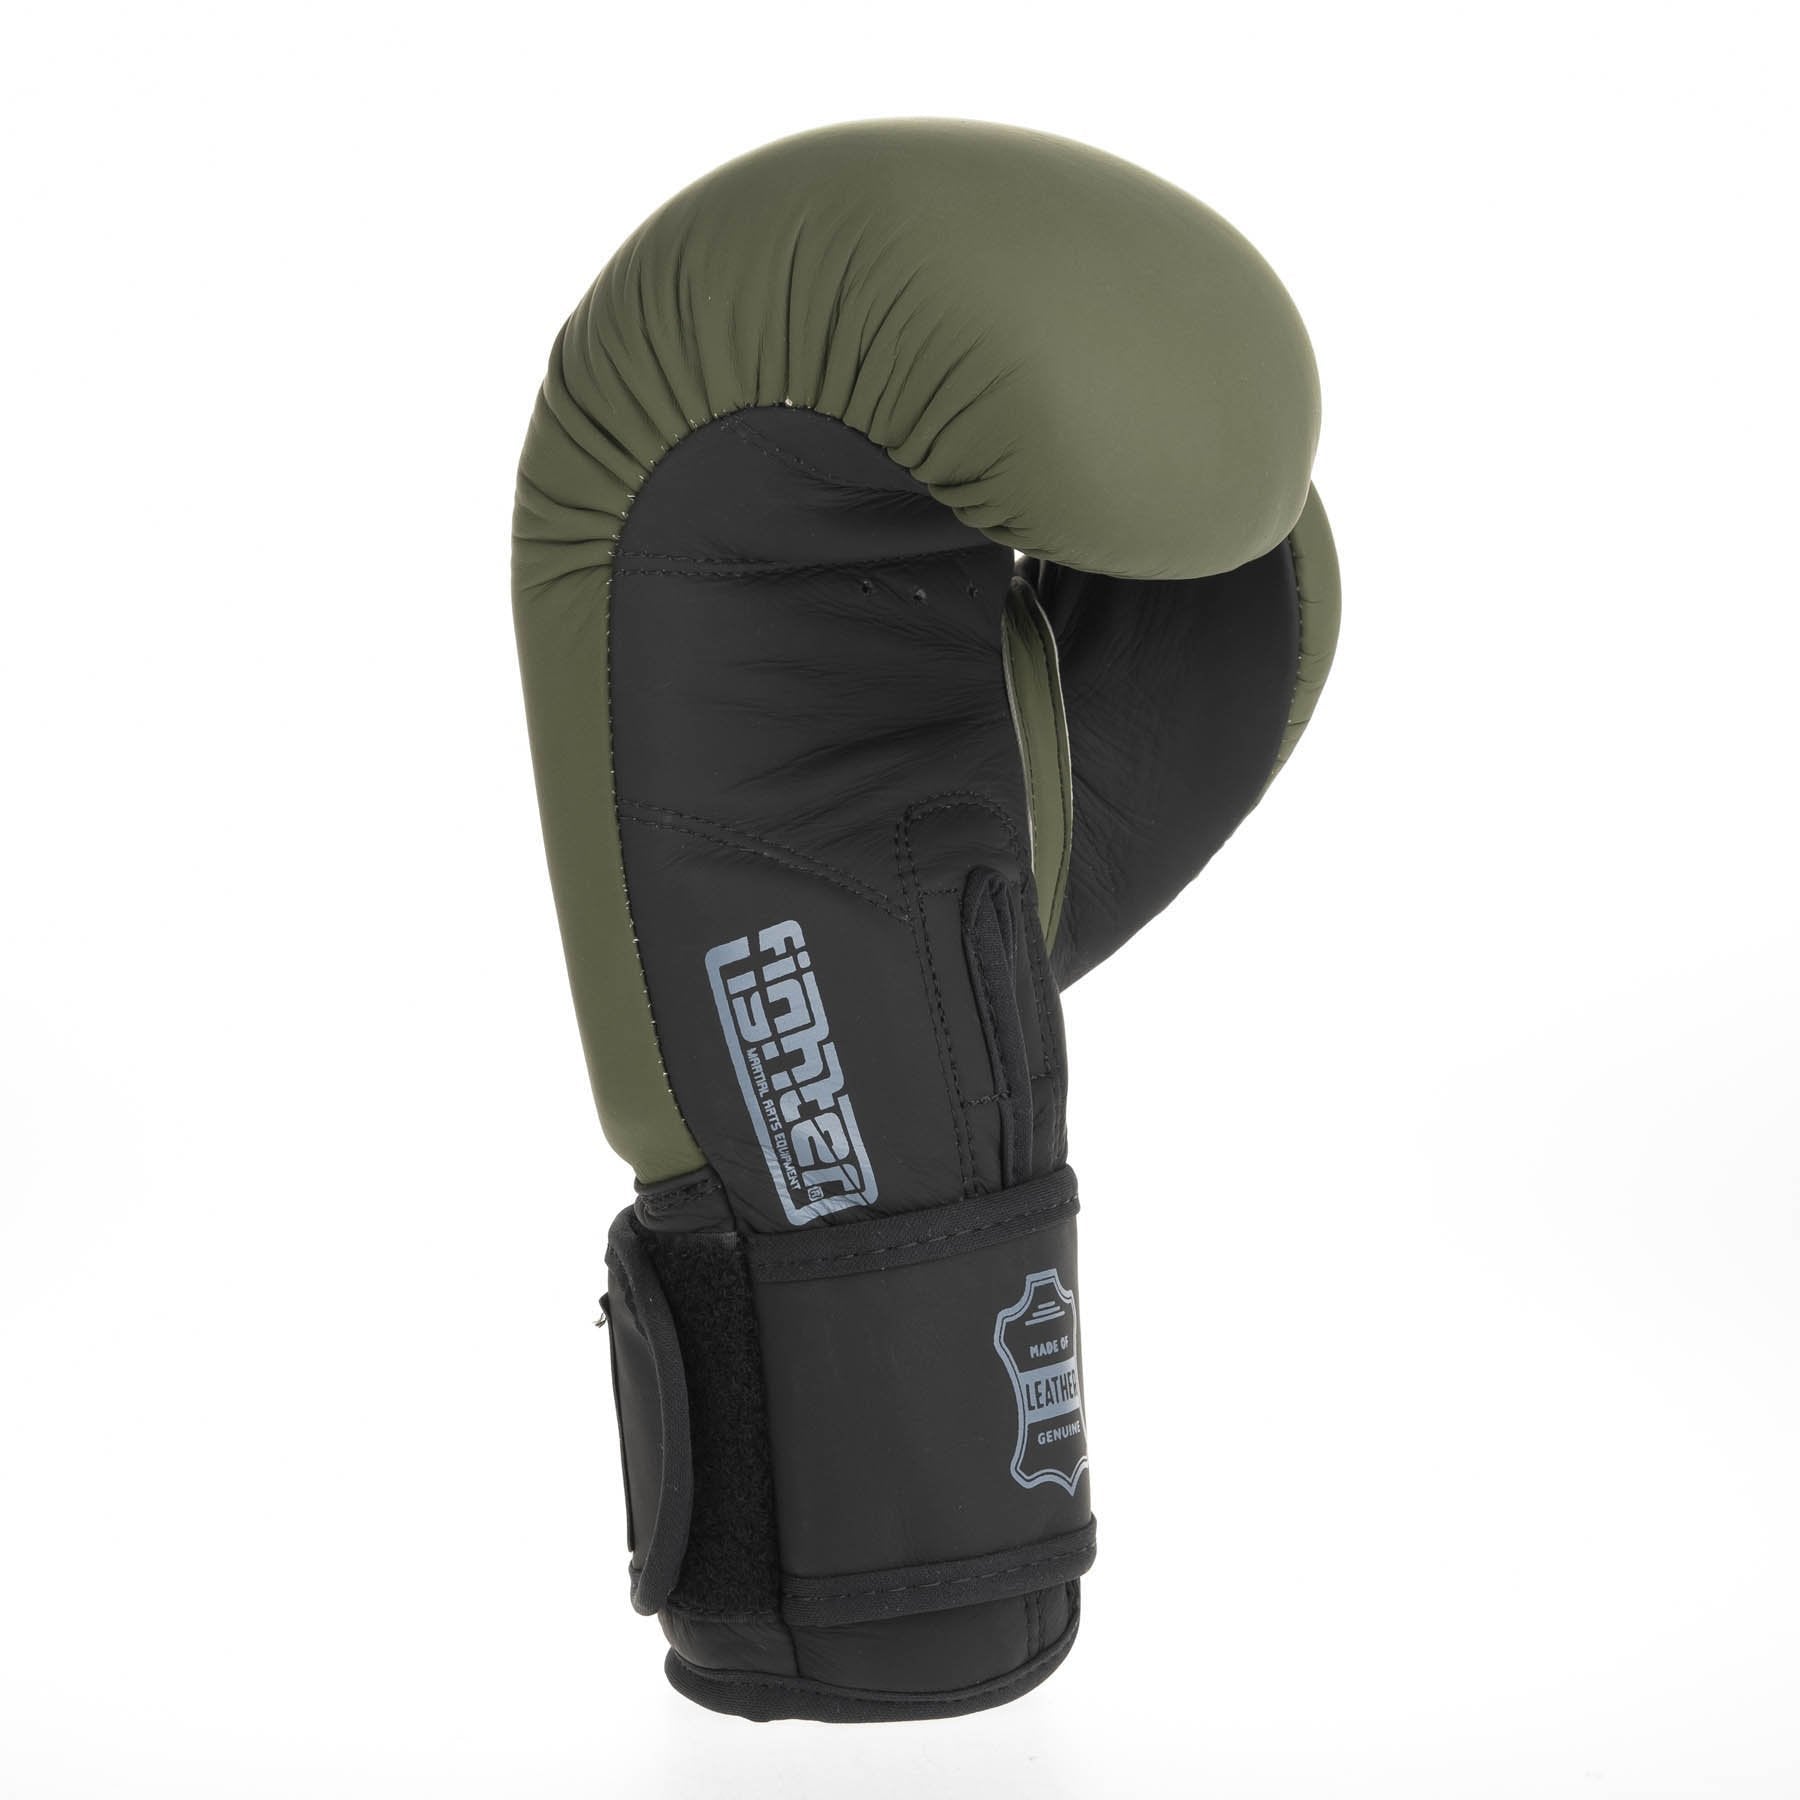 Fighter Boxing Gloves SIAM - khaki